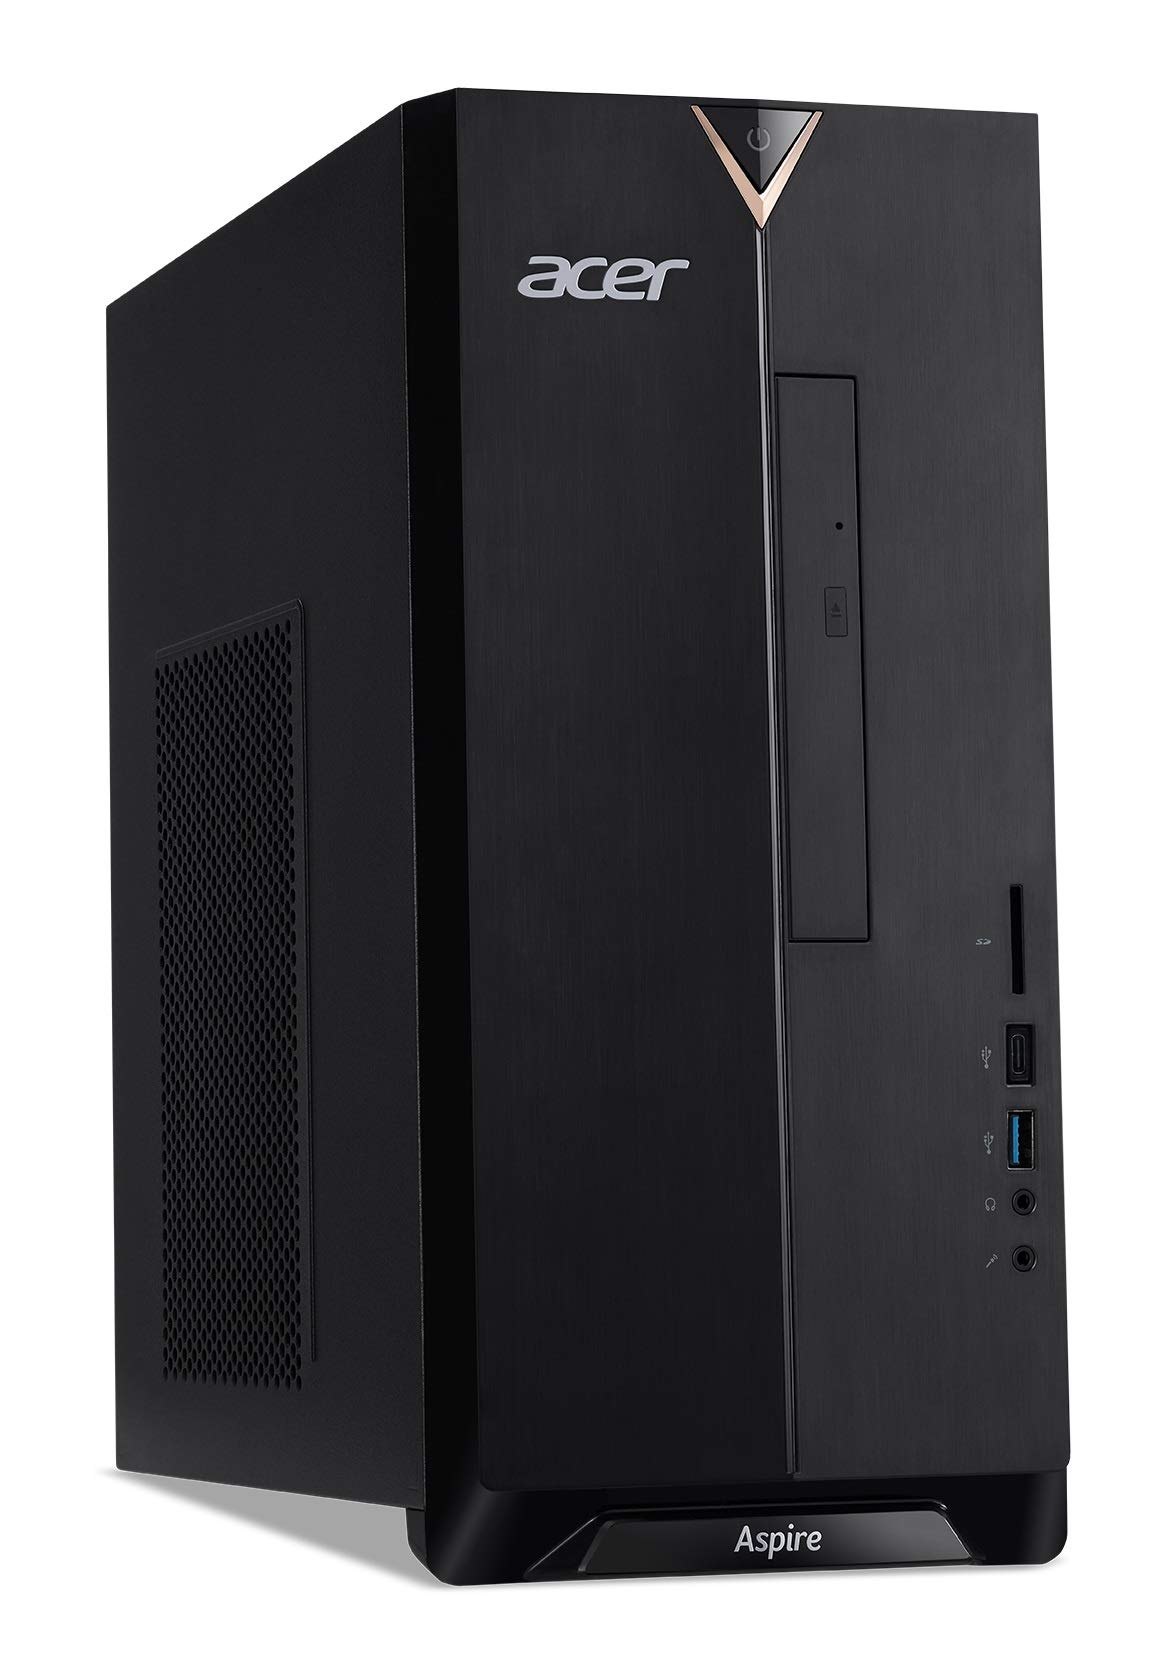 Acer Aspire TC-895-UA91 Desktop, 10th Gen Intel Core i3-10100 4-Core Processor, 8GB 2666MHz DDR4, 512GB NVMe M.2 SSD, 8X DVD, 802.11ax Wi-Fi 6, USB 3.2 Type C, Windows 10 Home